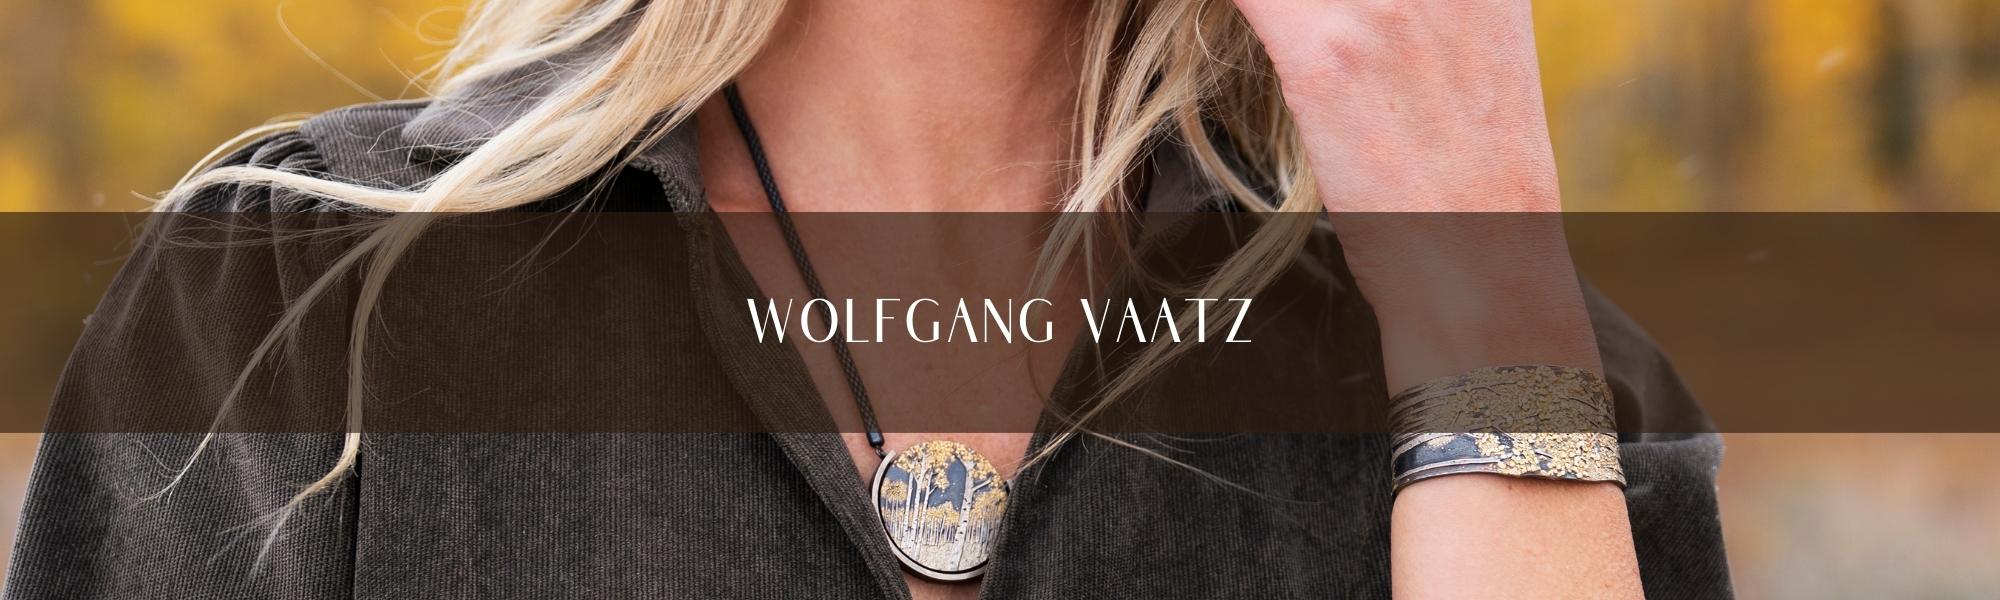 Wolfgang Vaatz Collection